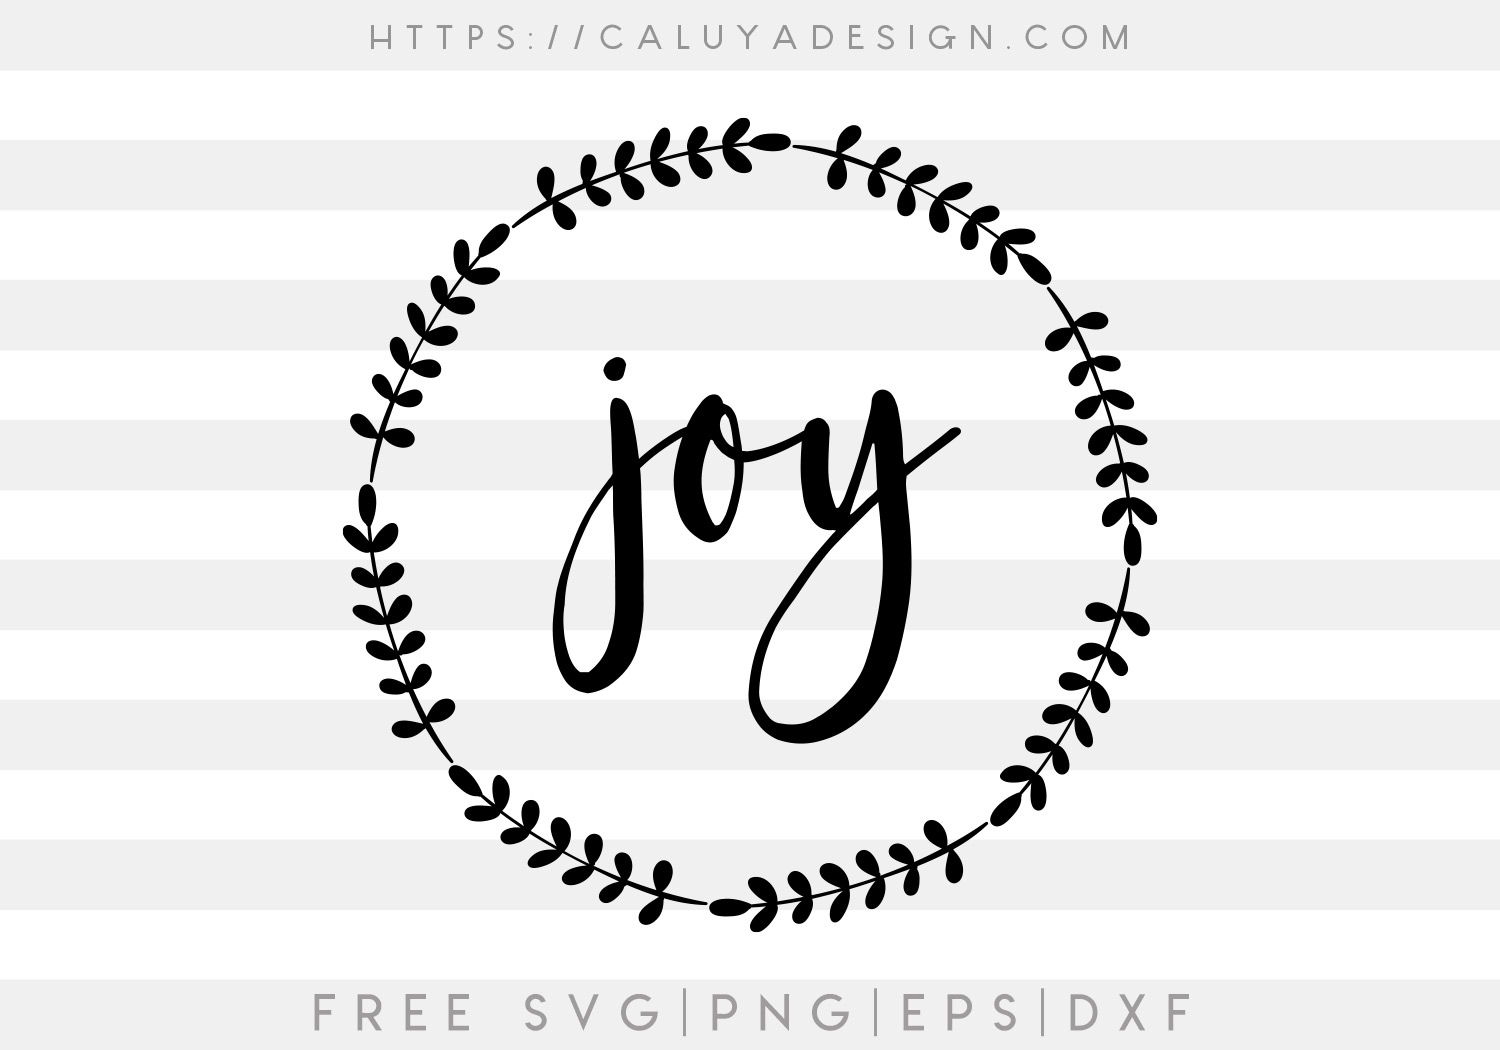 Wreath Joy SVG, PNG, EPS & DXF